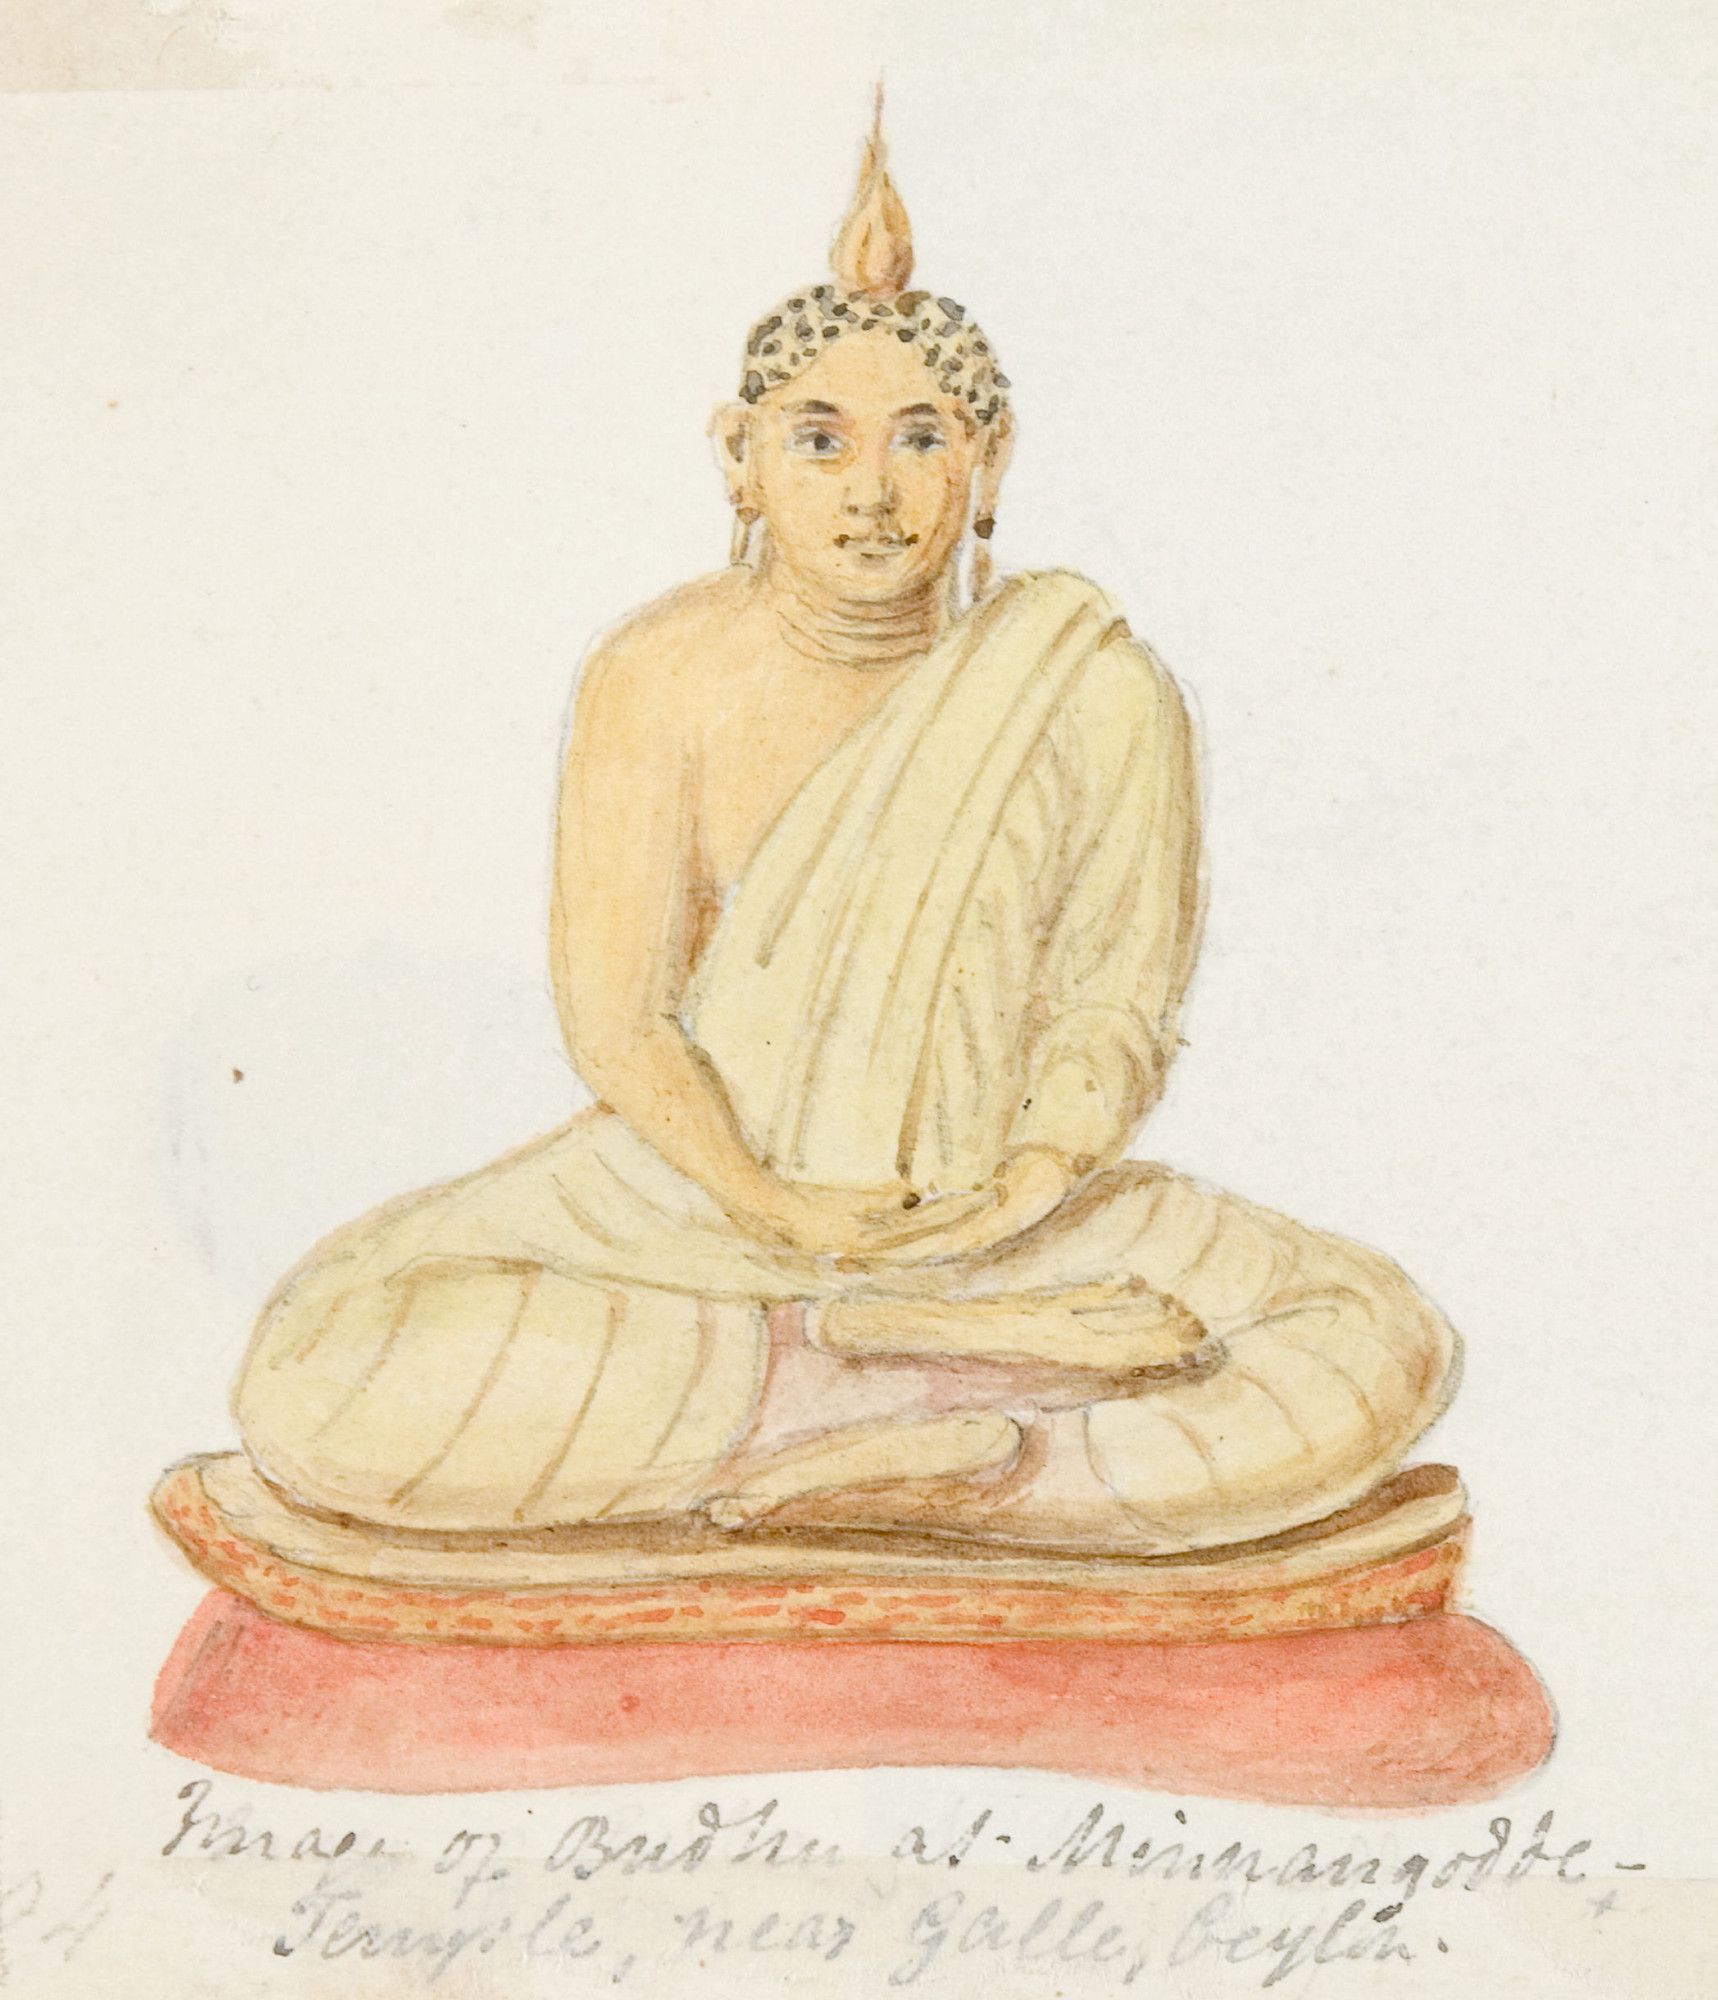 Image of buddha at Minnangodde Temple, near Galle, Ceylon